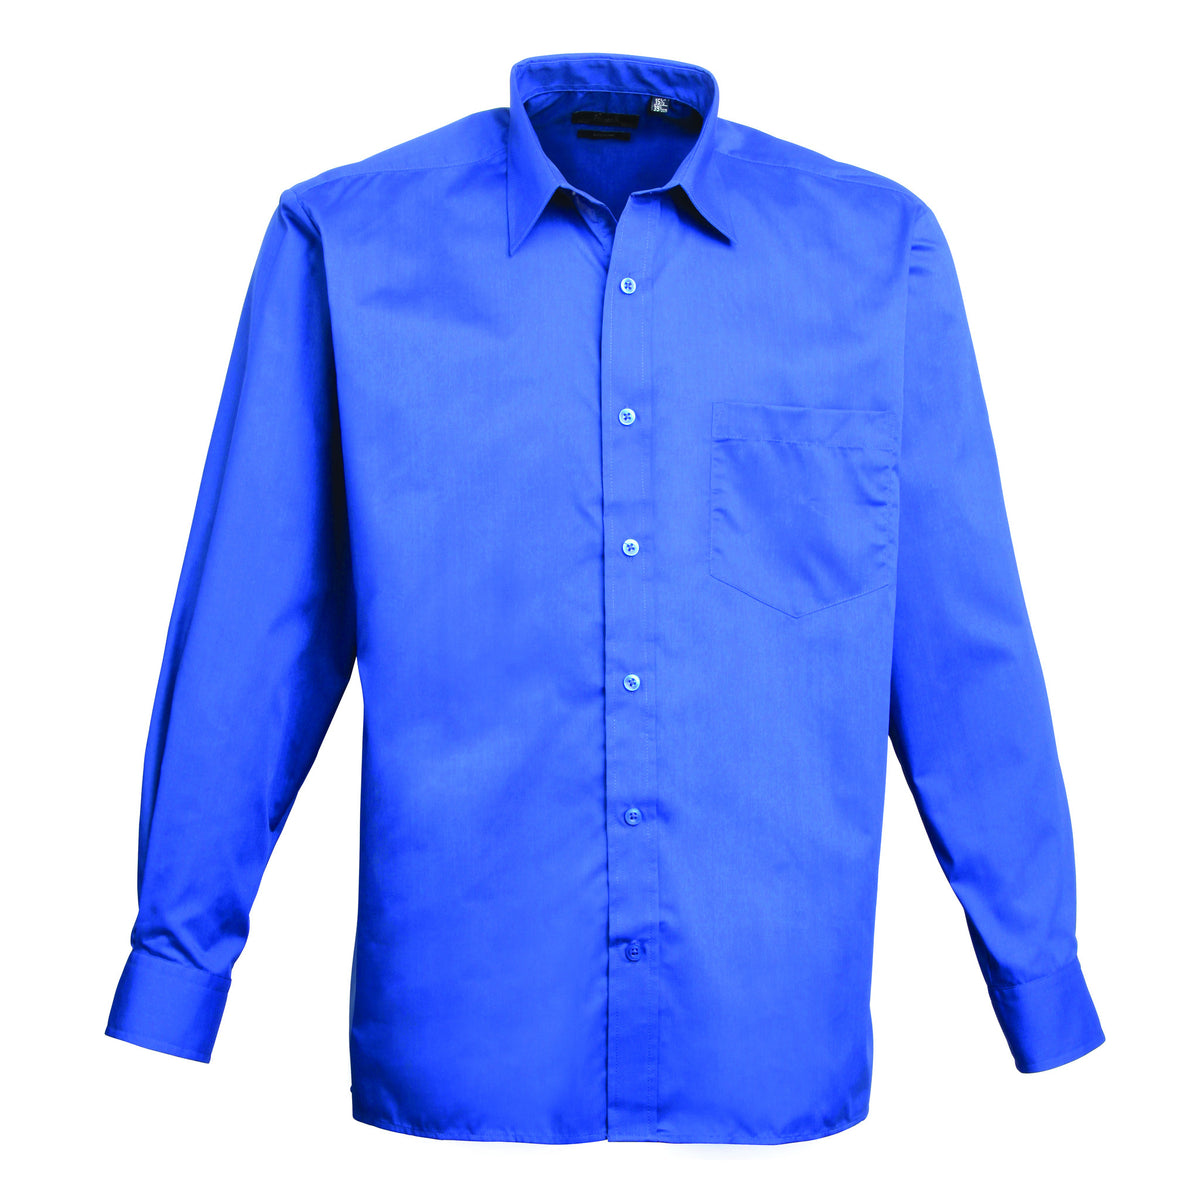 Premier Poplin Shirts (Sapphire, Turquoise, Light Blue, Mid Blue, Royal) - peterdrew.com
 - 6